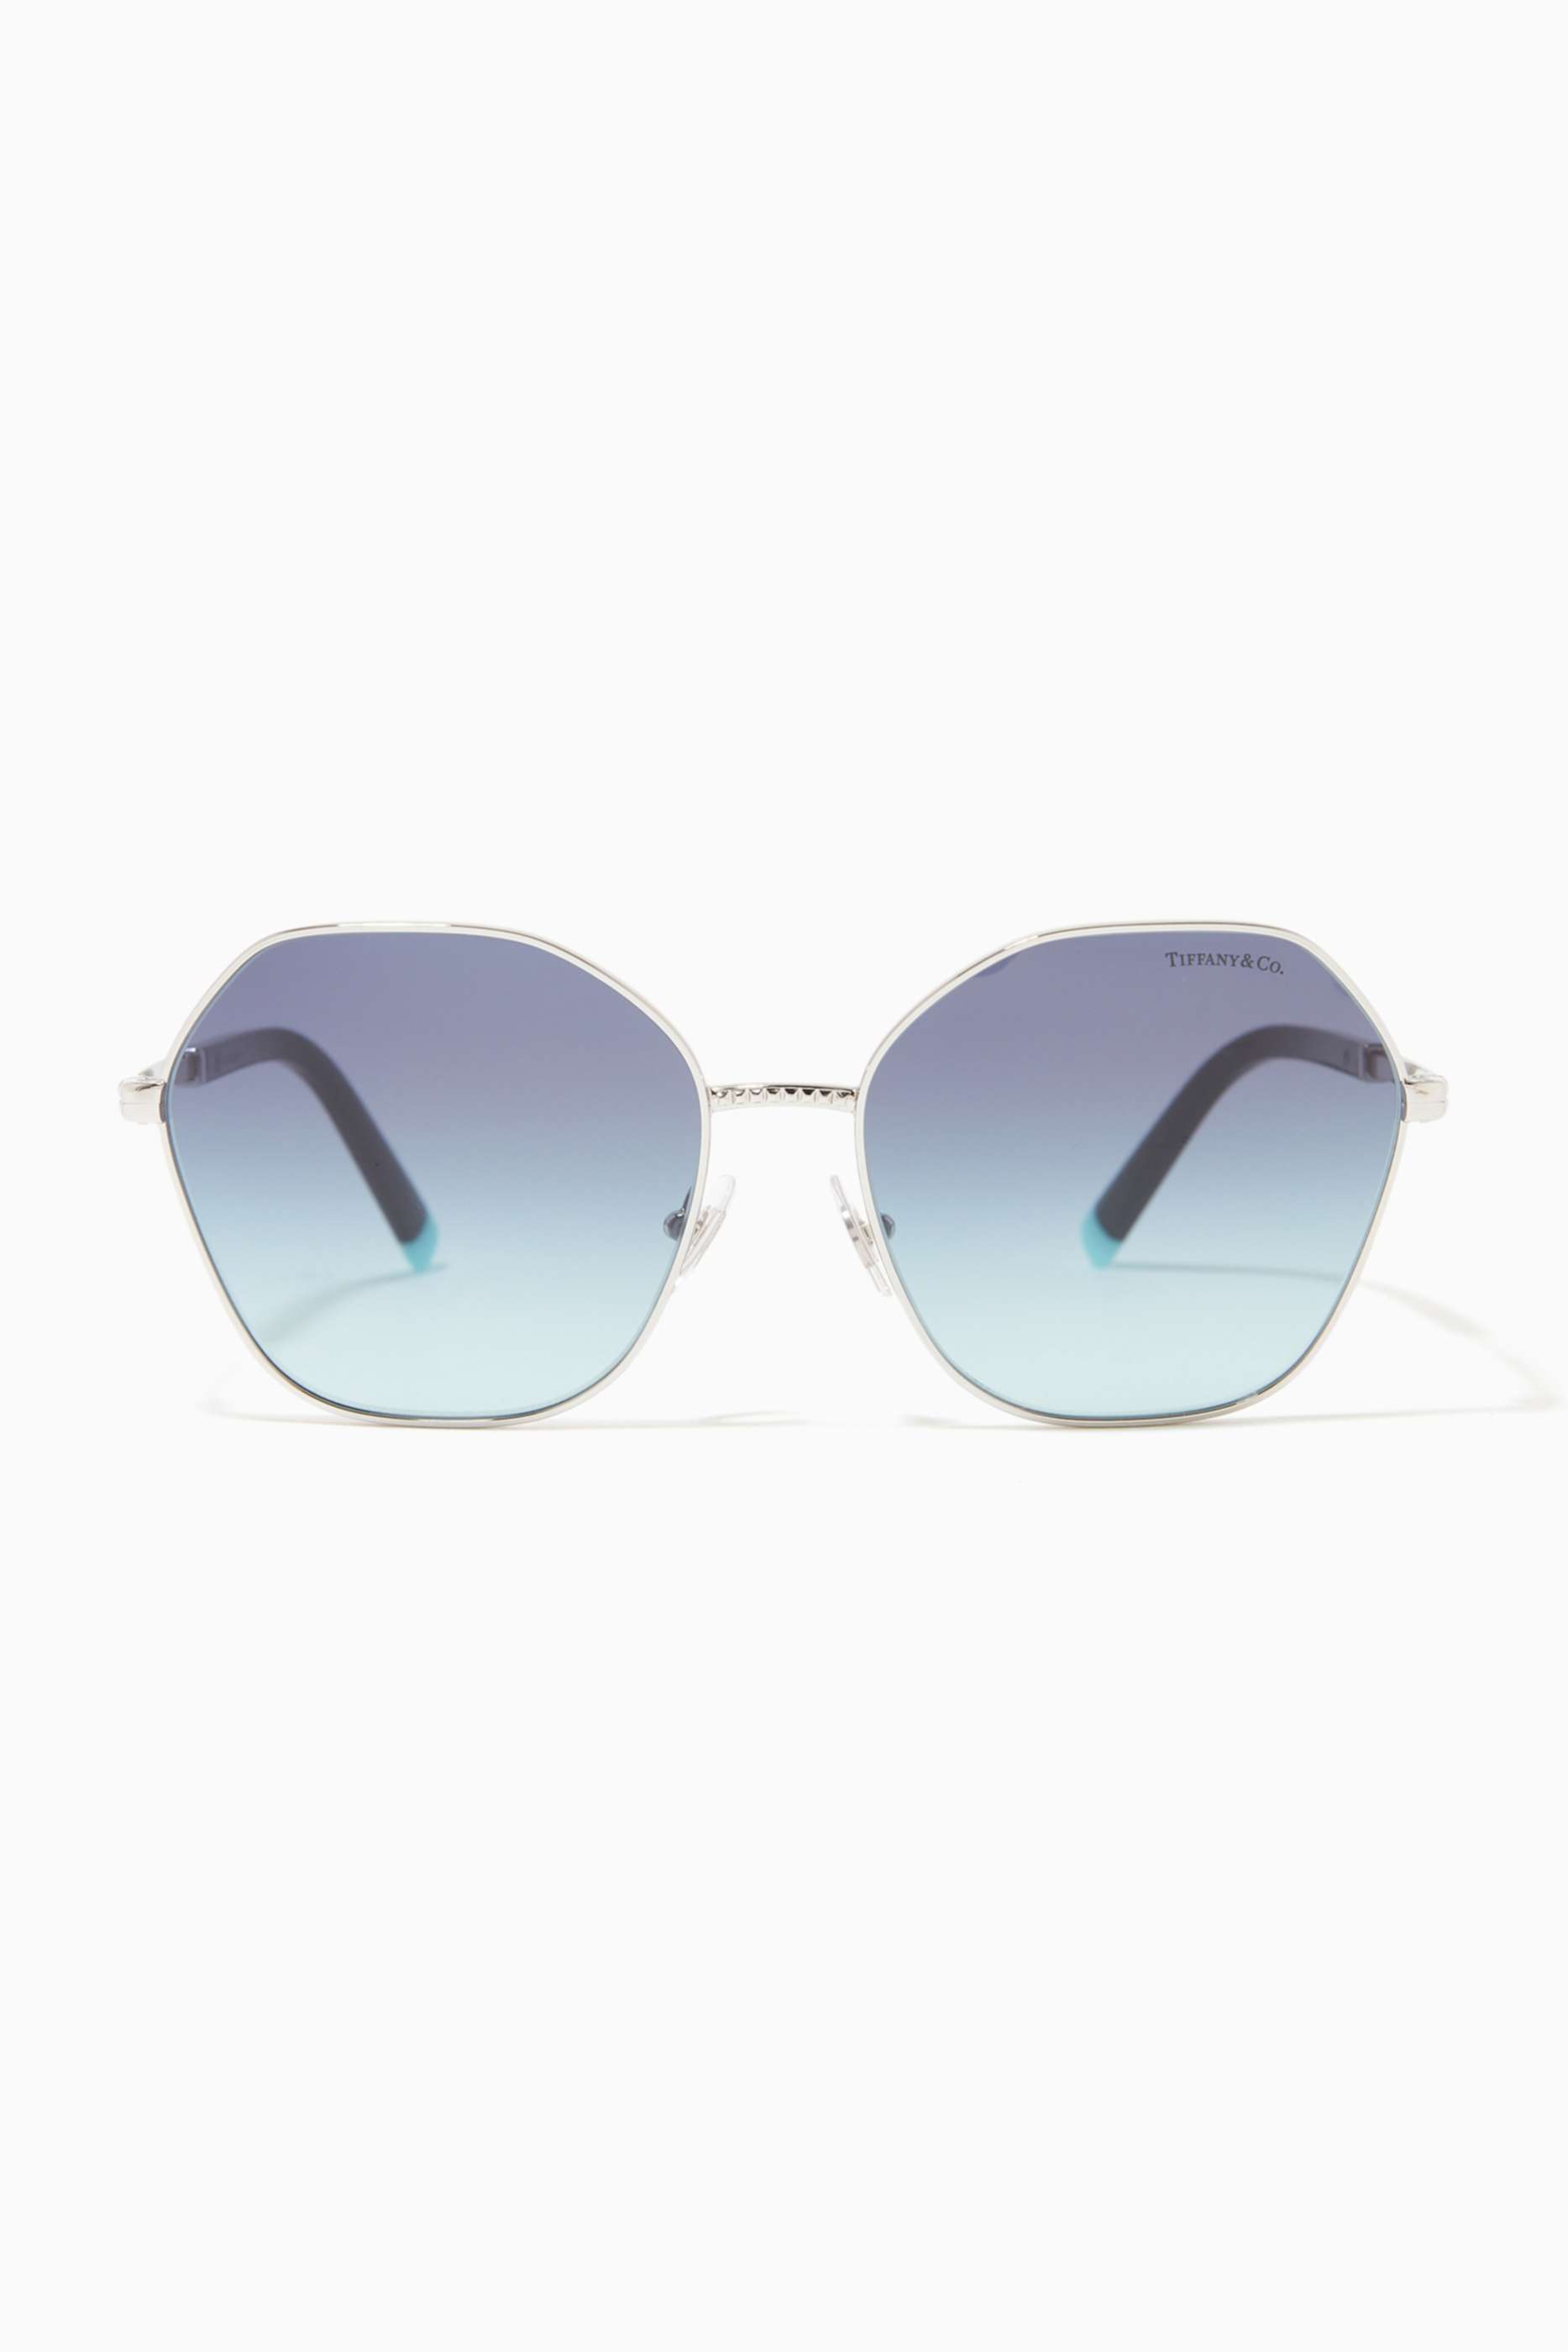 shop-tiffany-co-hexagonal-sunglasses-for-women